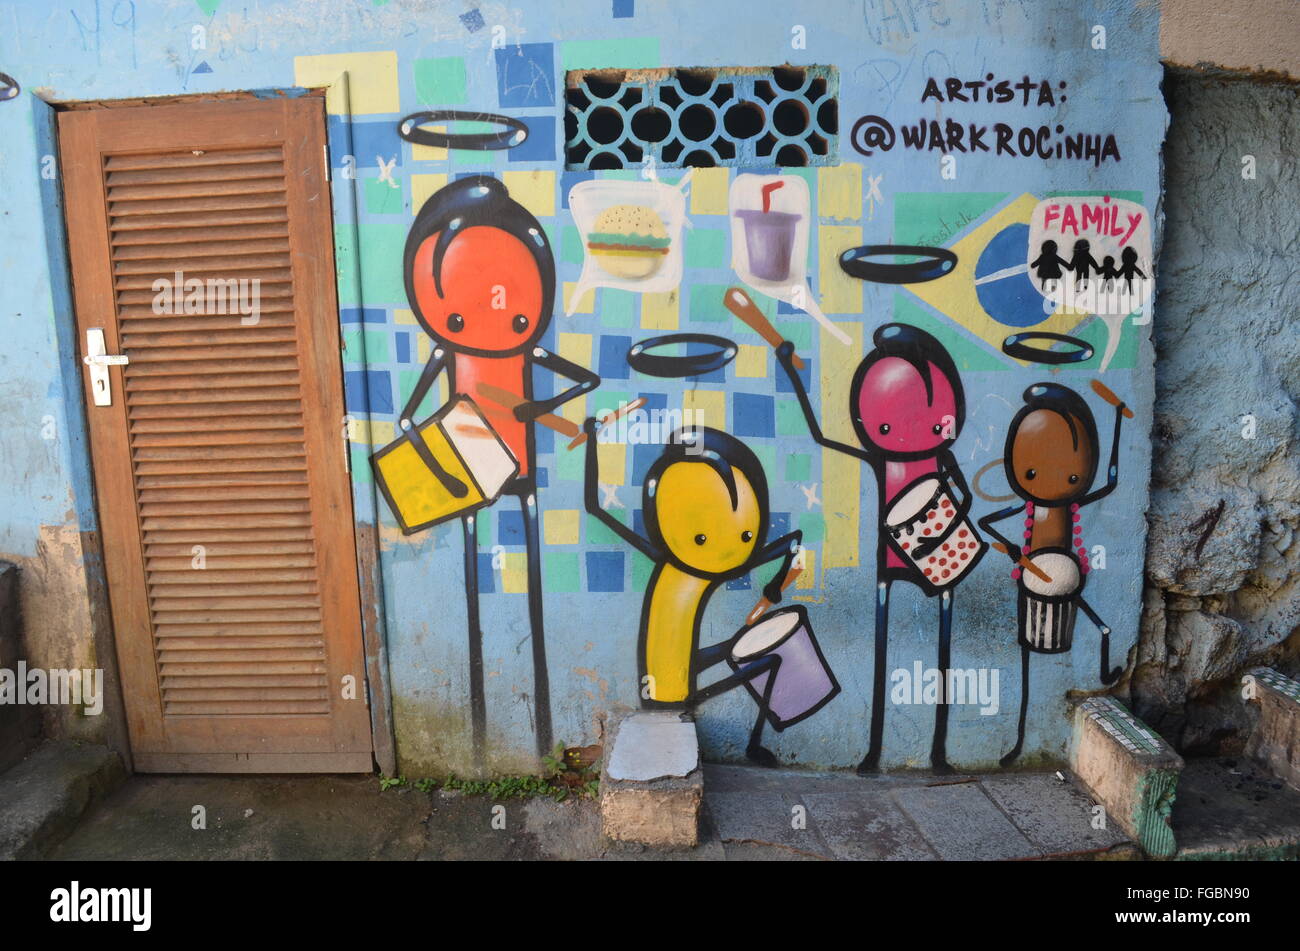 Brazil :D Amgela6 - Illustrations ART street